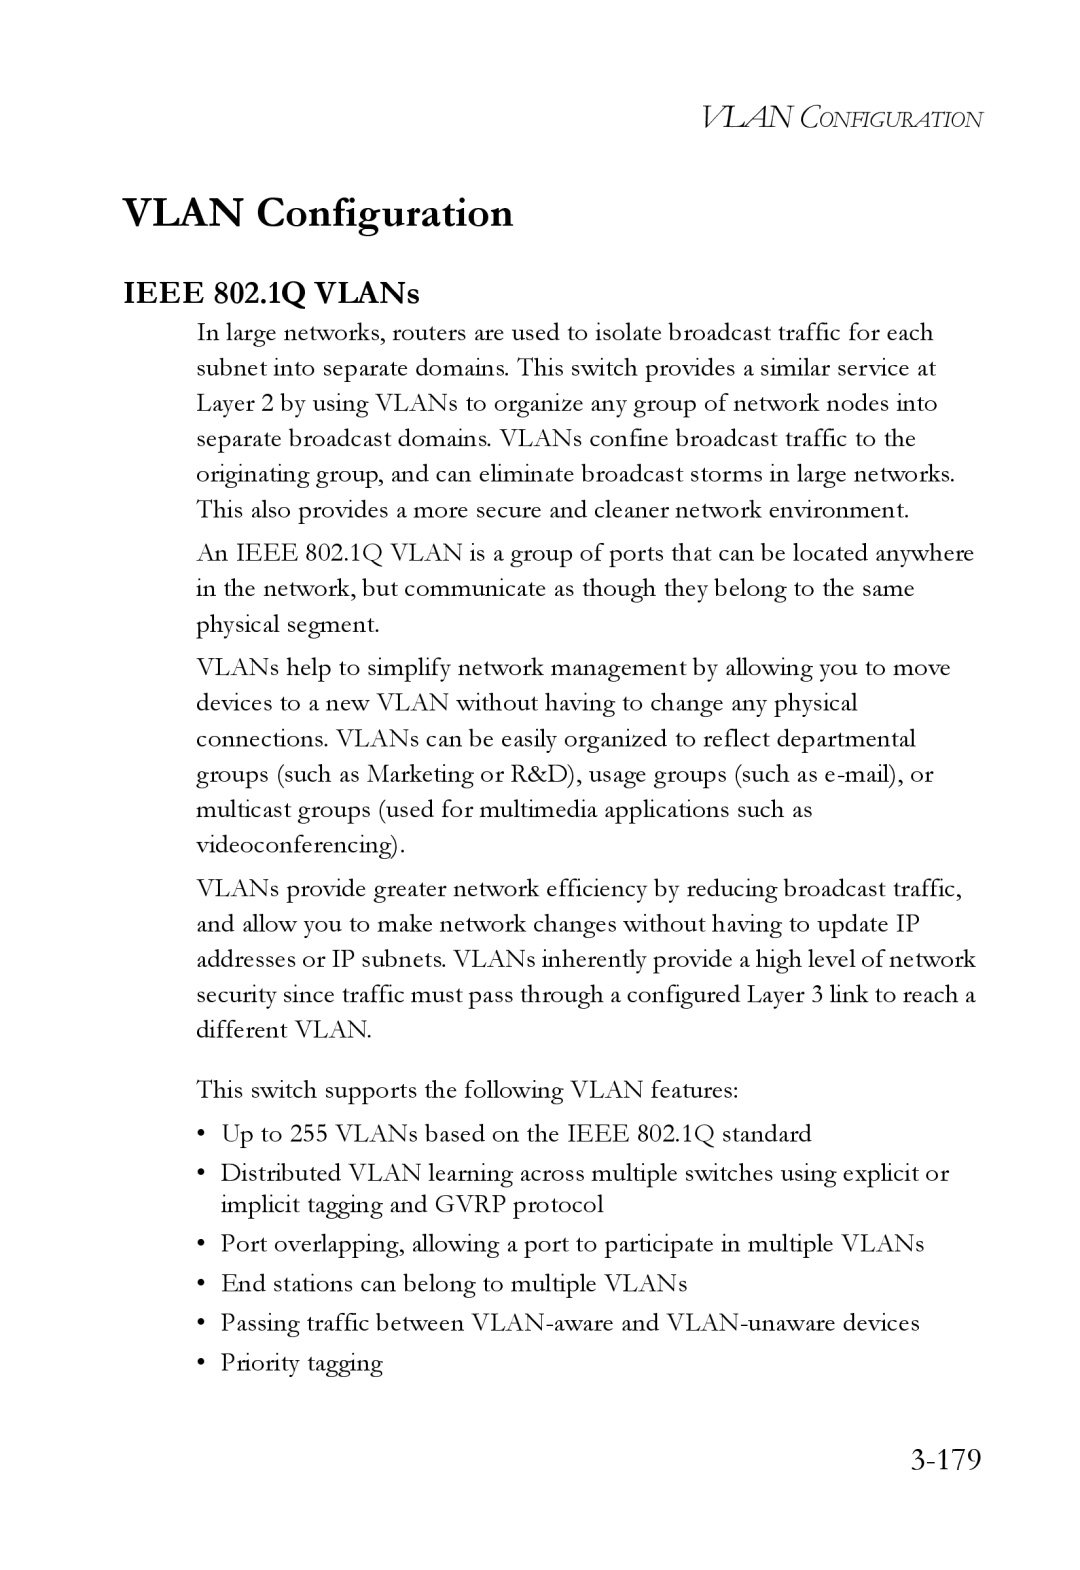 SMC Networks SMC6824M manual Vlan Configuration, Ieee 802.1Q VLANs, 179 